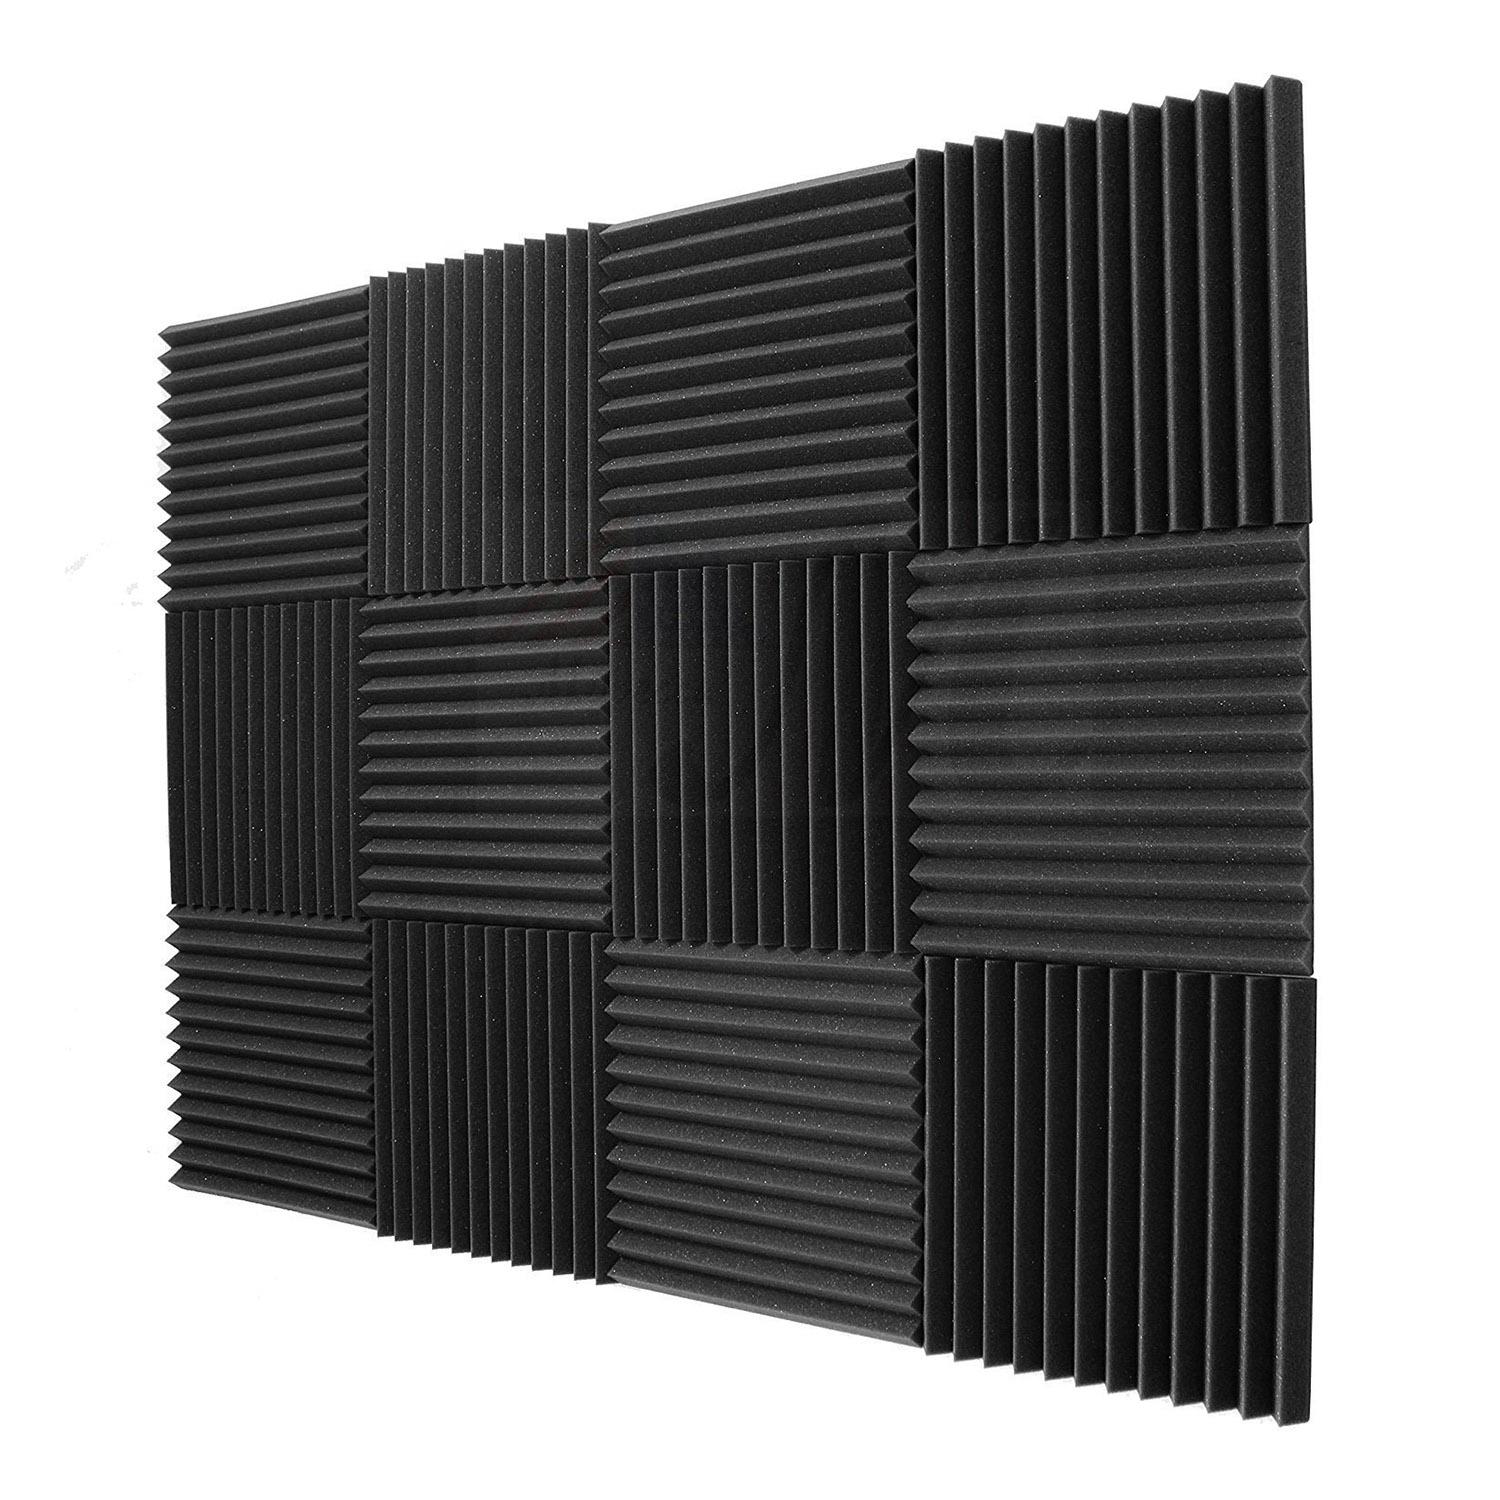 24 Pack- Acoustic Panels foam Engineering sponge Wedges Soundproofing ...